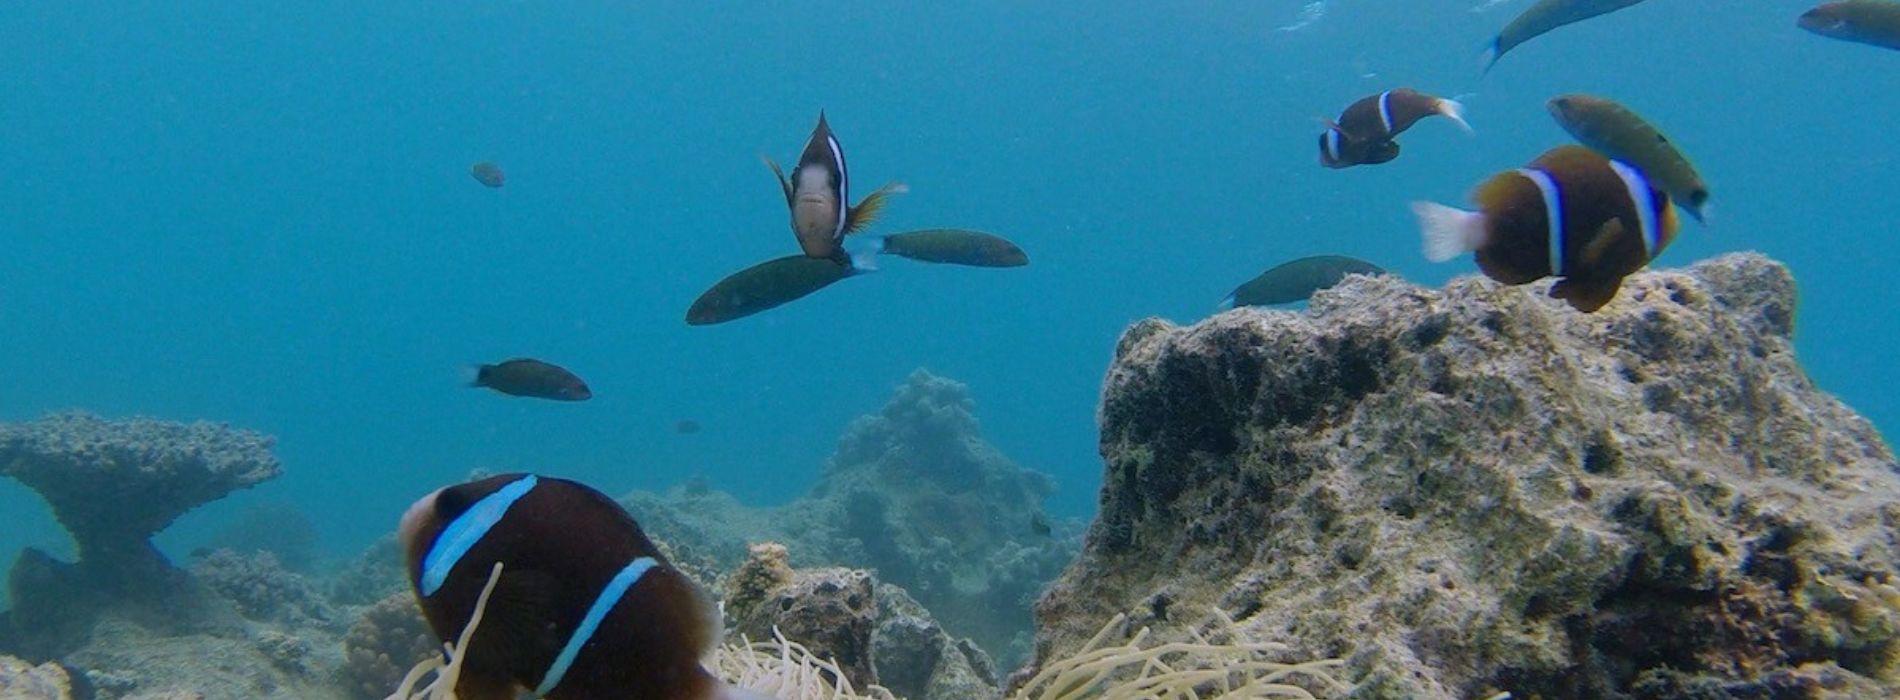 Barrier-Reef-Anemonefish-baby-hatching